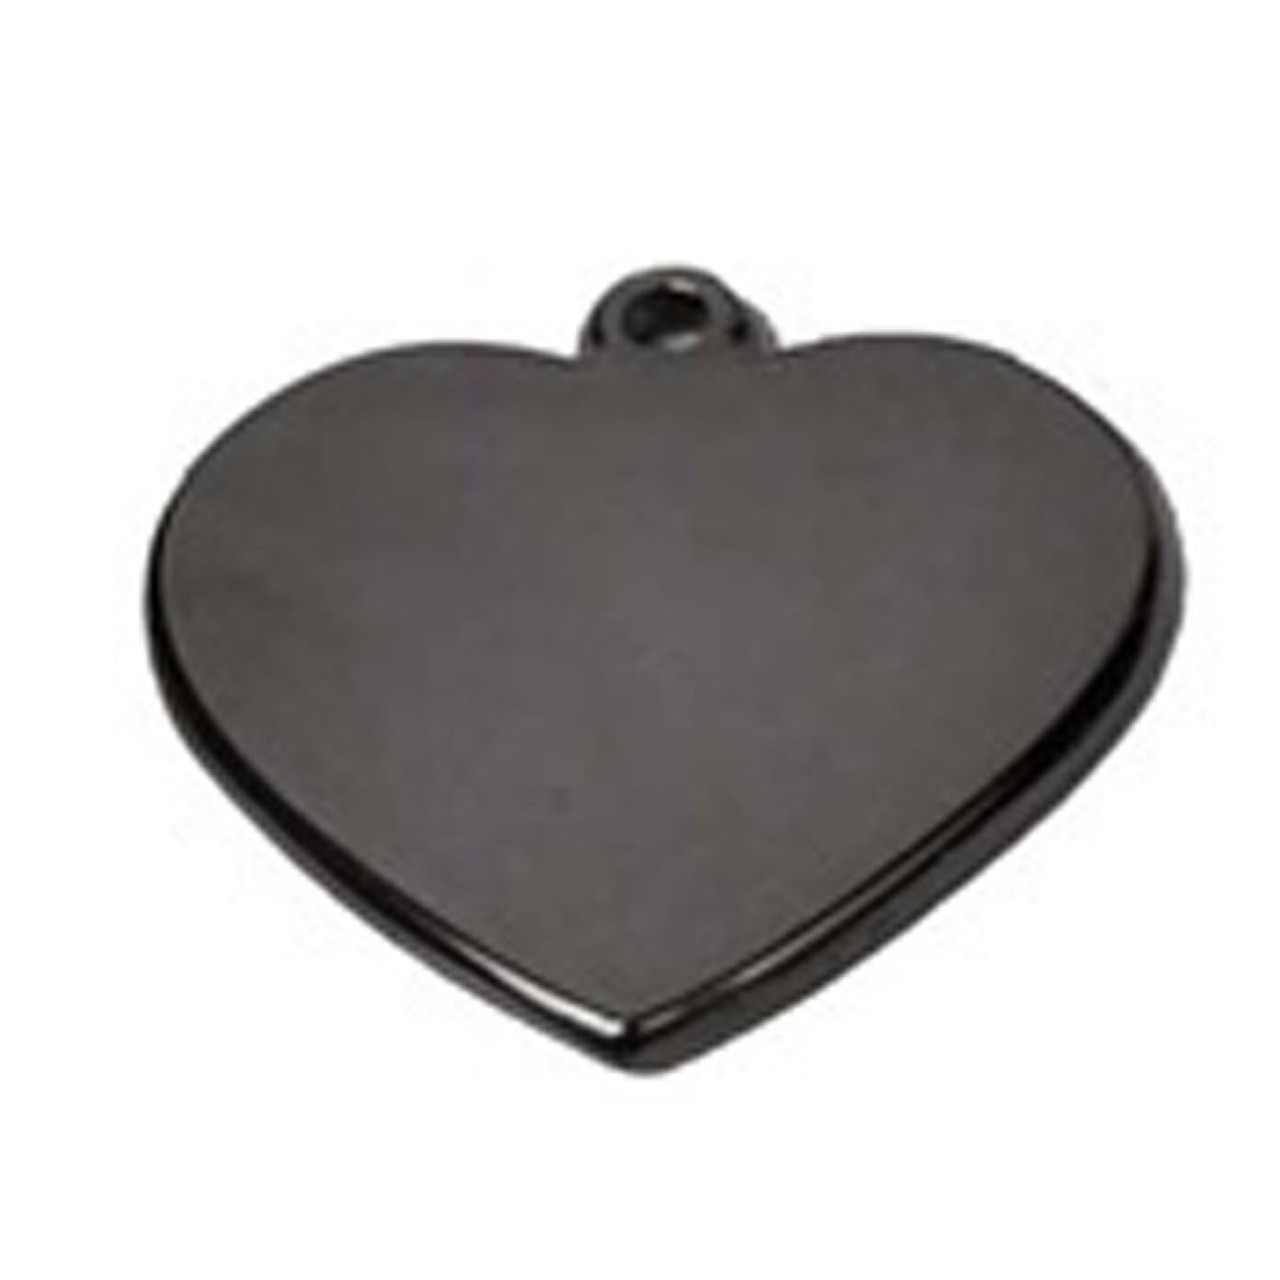 Brass Heart-shape Pet Tags